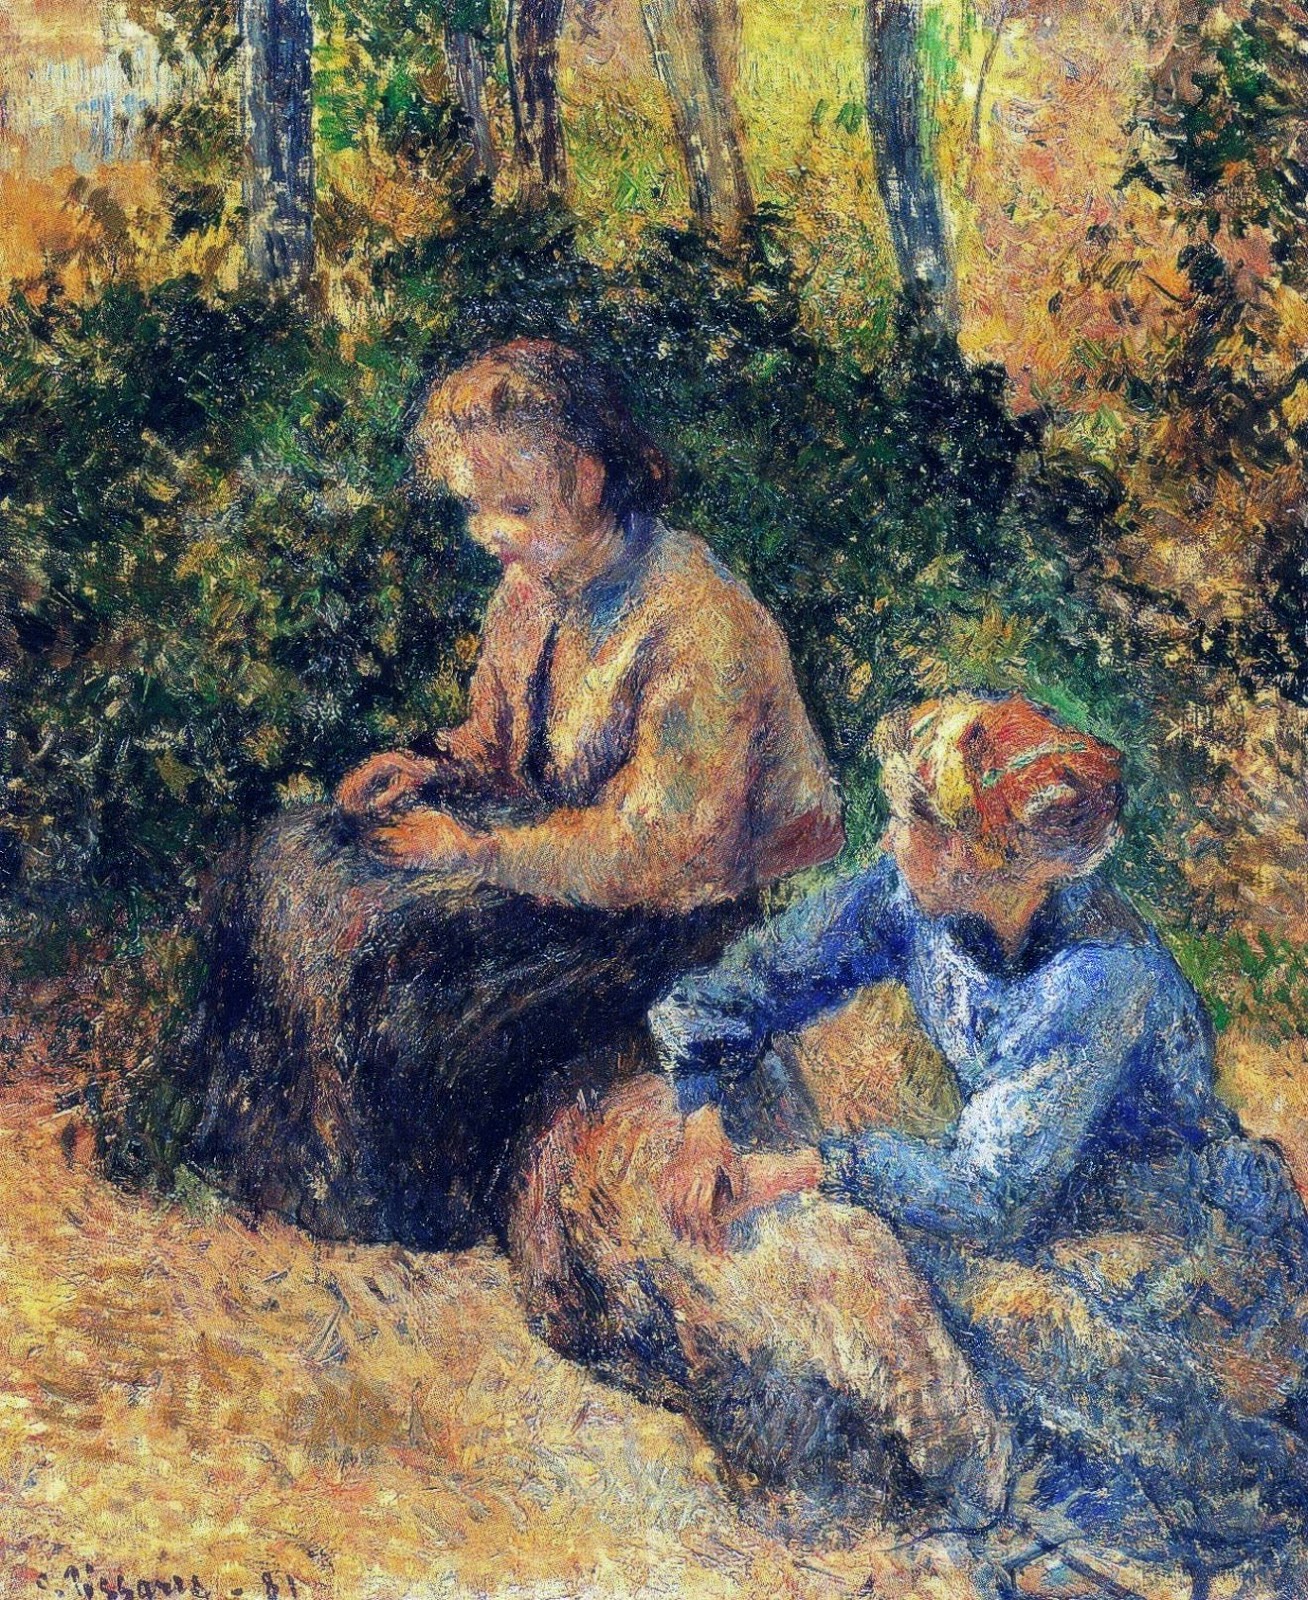 Camille+Pissarro-1830-1903 (340).jpg